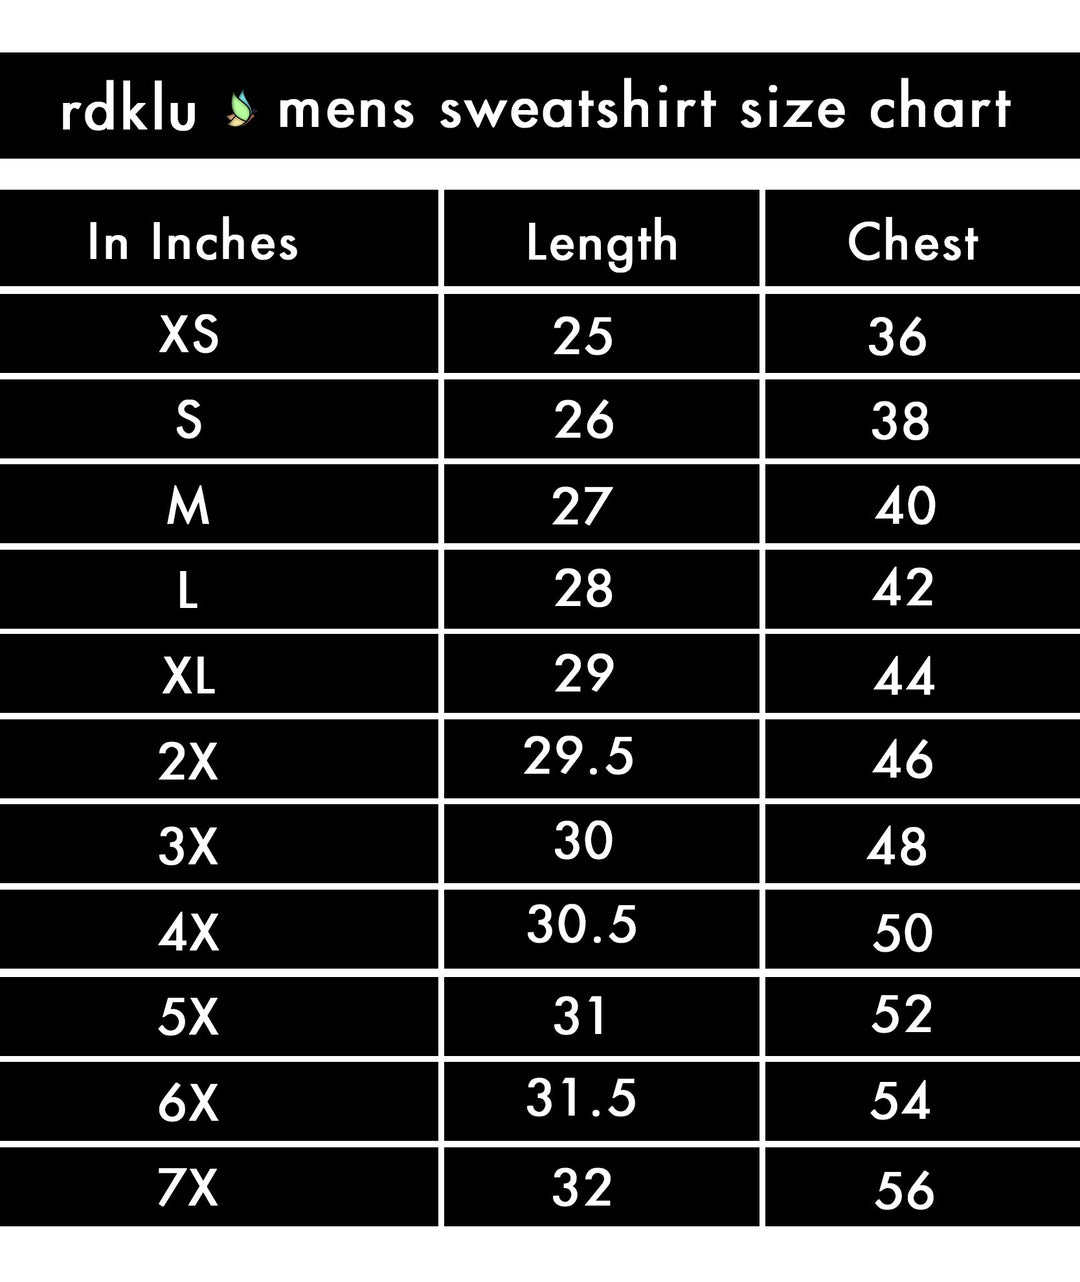 RDKLU MENS SWEATSHIRT - RDKL - Men's Sweatshirt#81